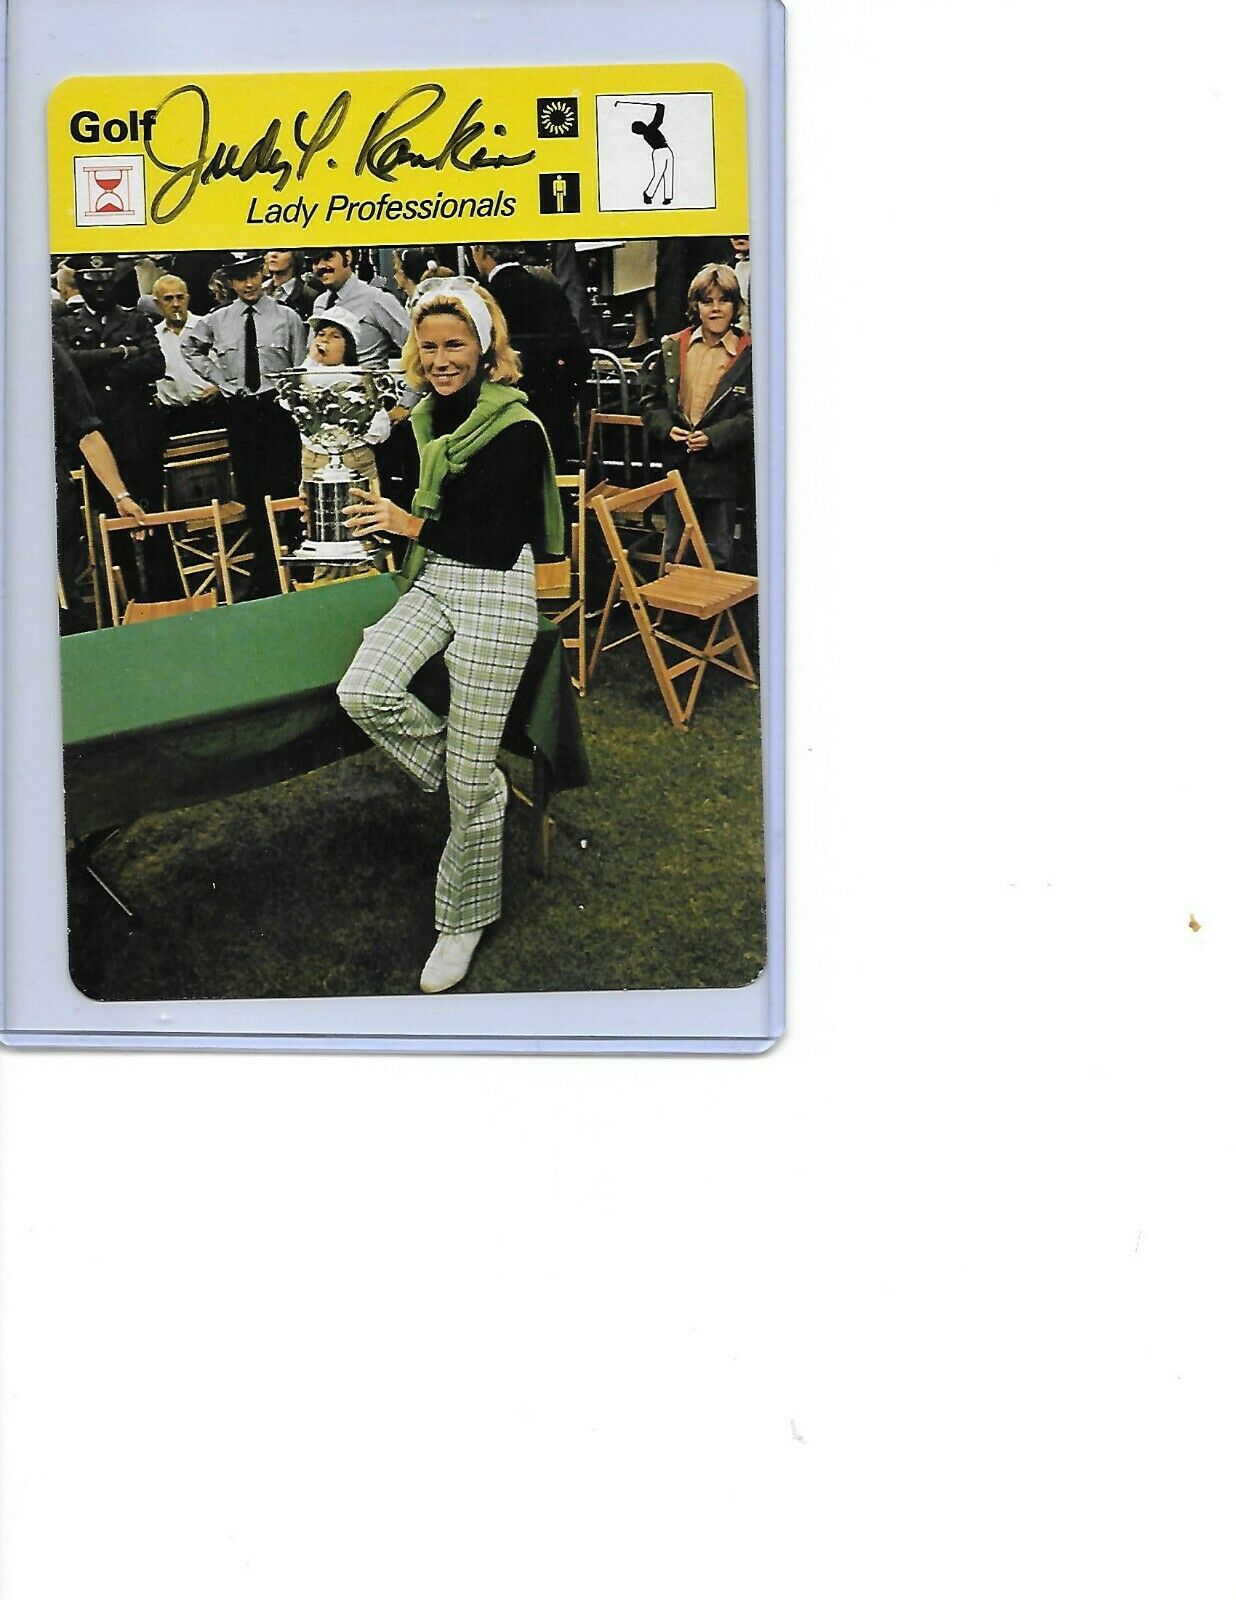 1979 Sportscaster Judy Rankin Signed Card Auto Golf